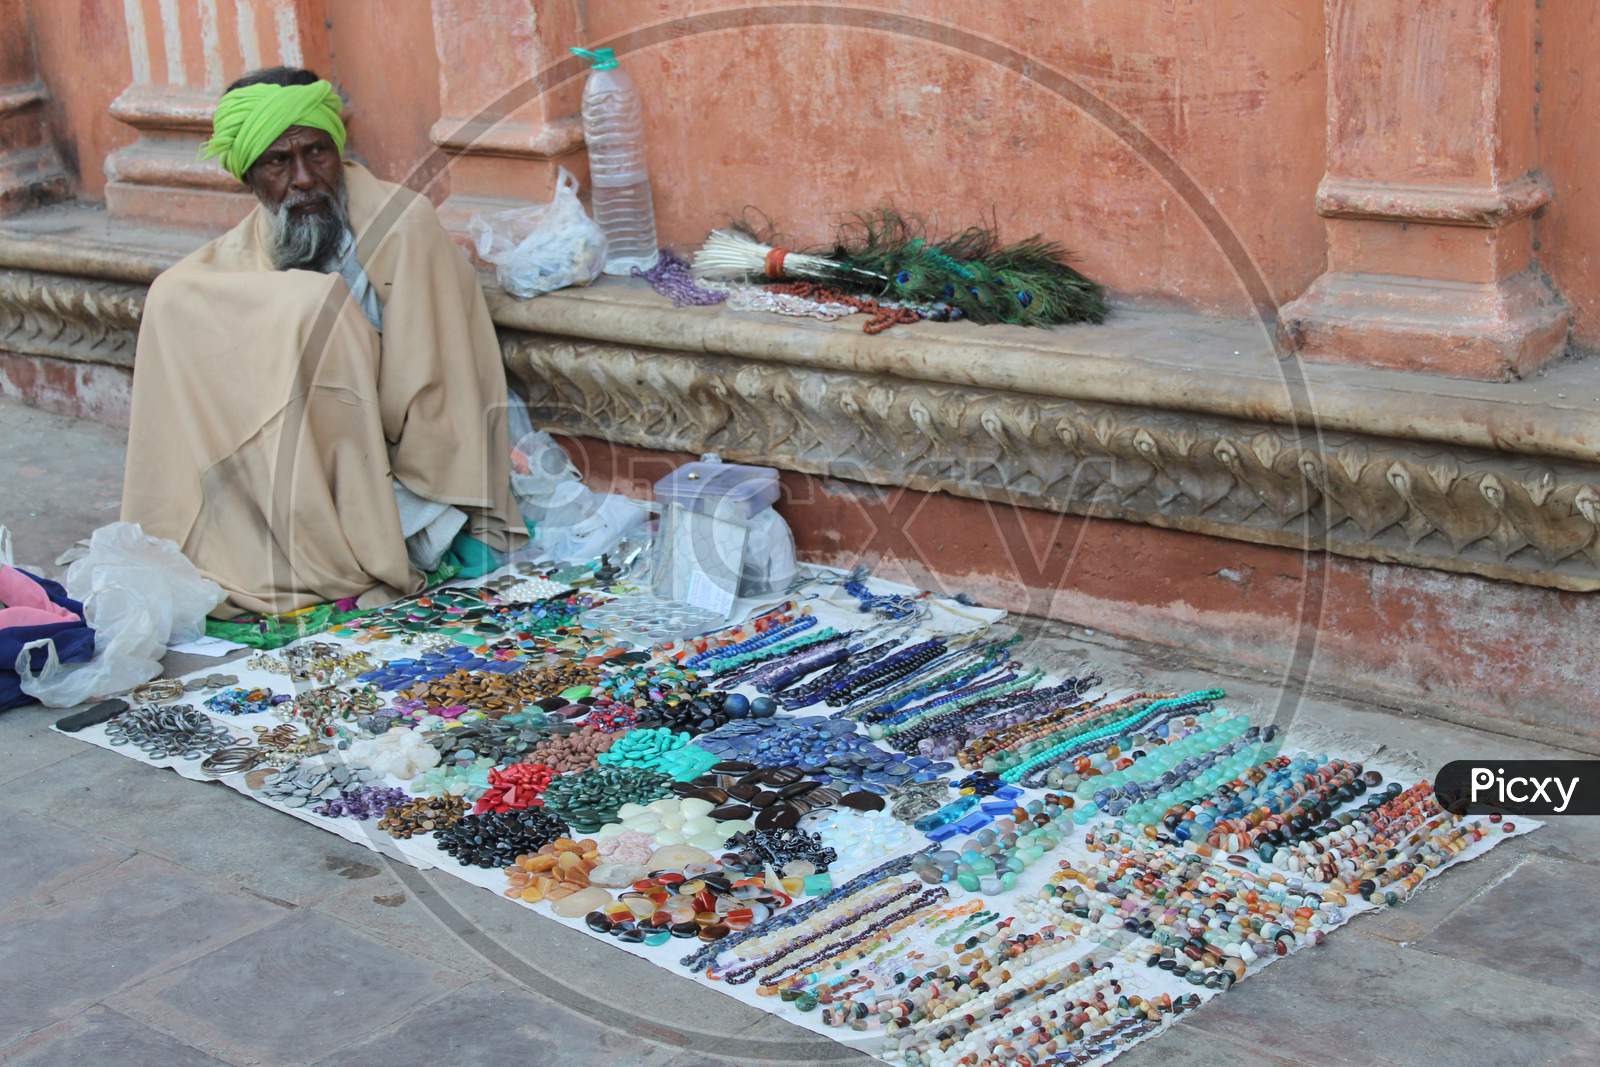 The poor man's roadside jewelry shop